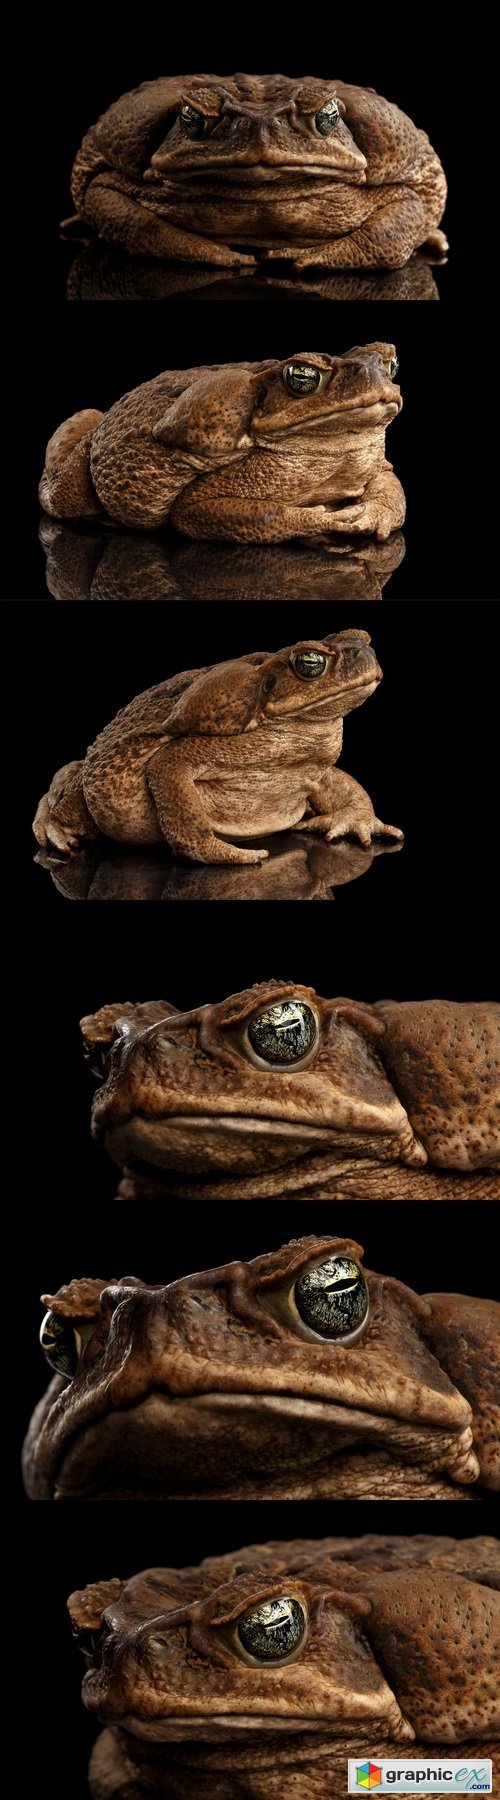 Closeup Cane Toad - Bufo marinus